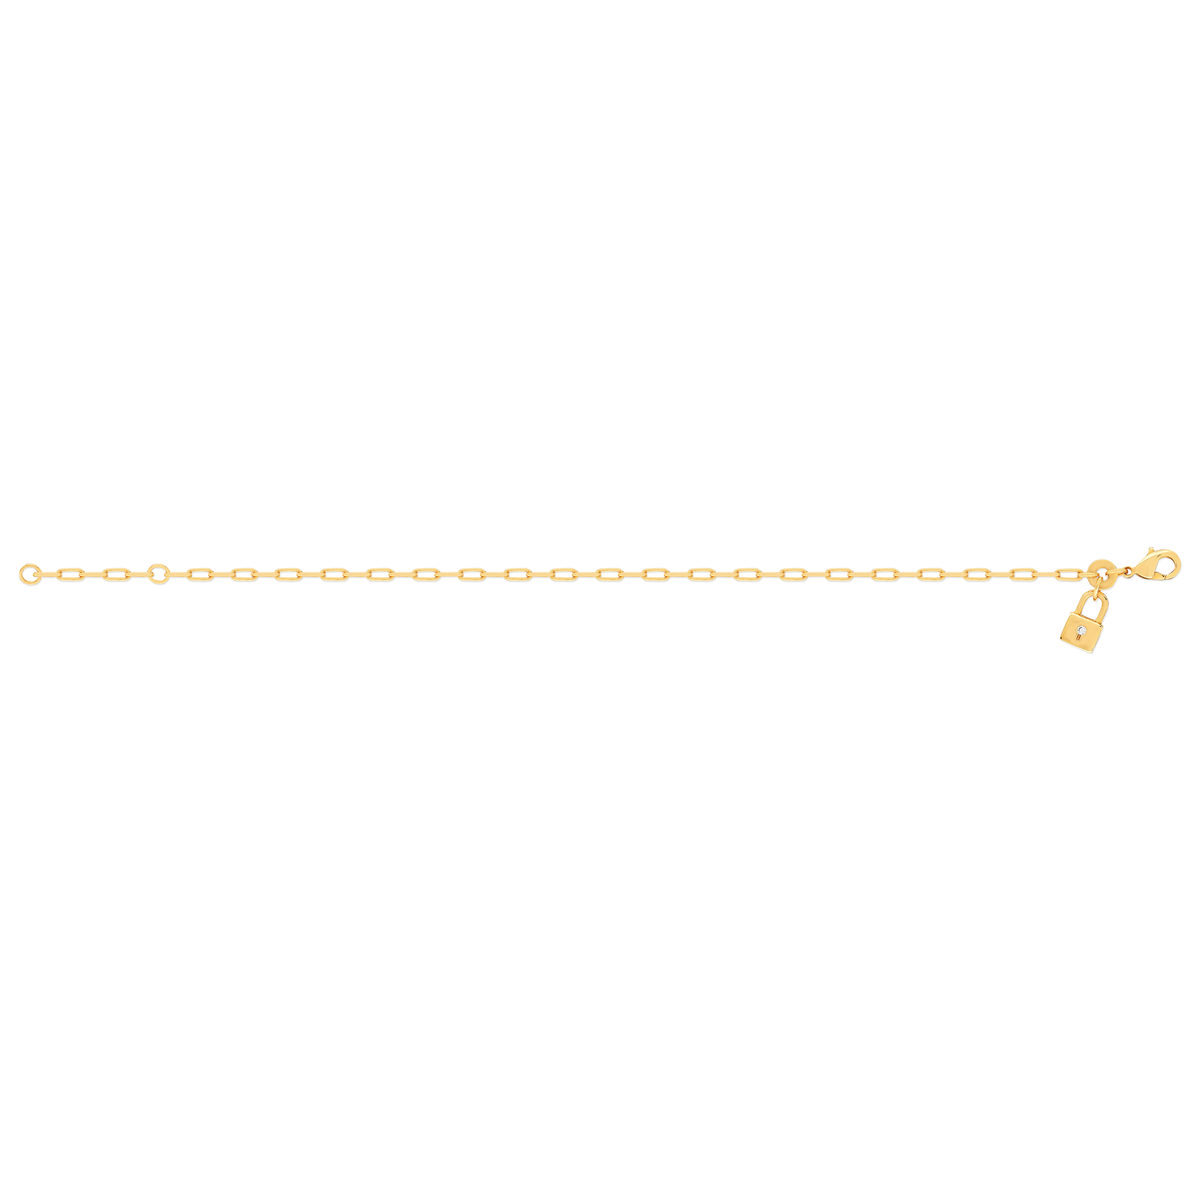 Bracelet plaqué or jaune motif cadenas zirconia 18 cm - vue 2